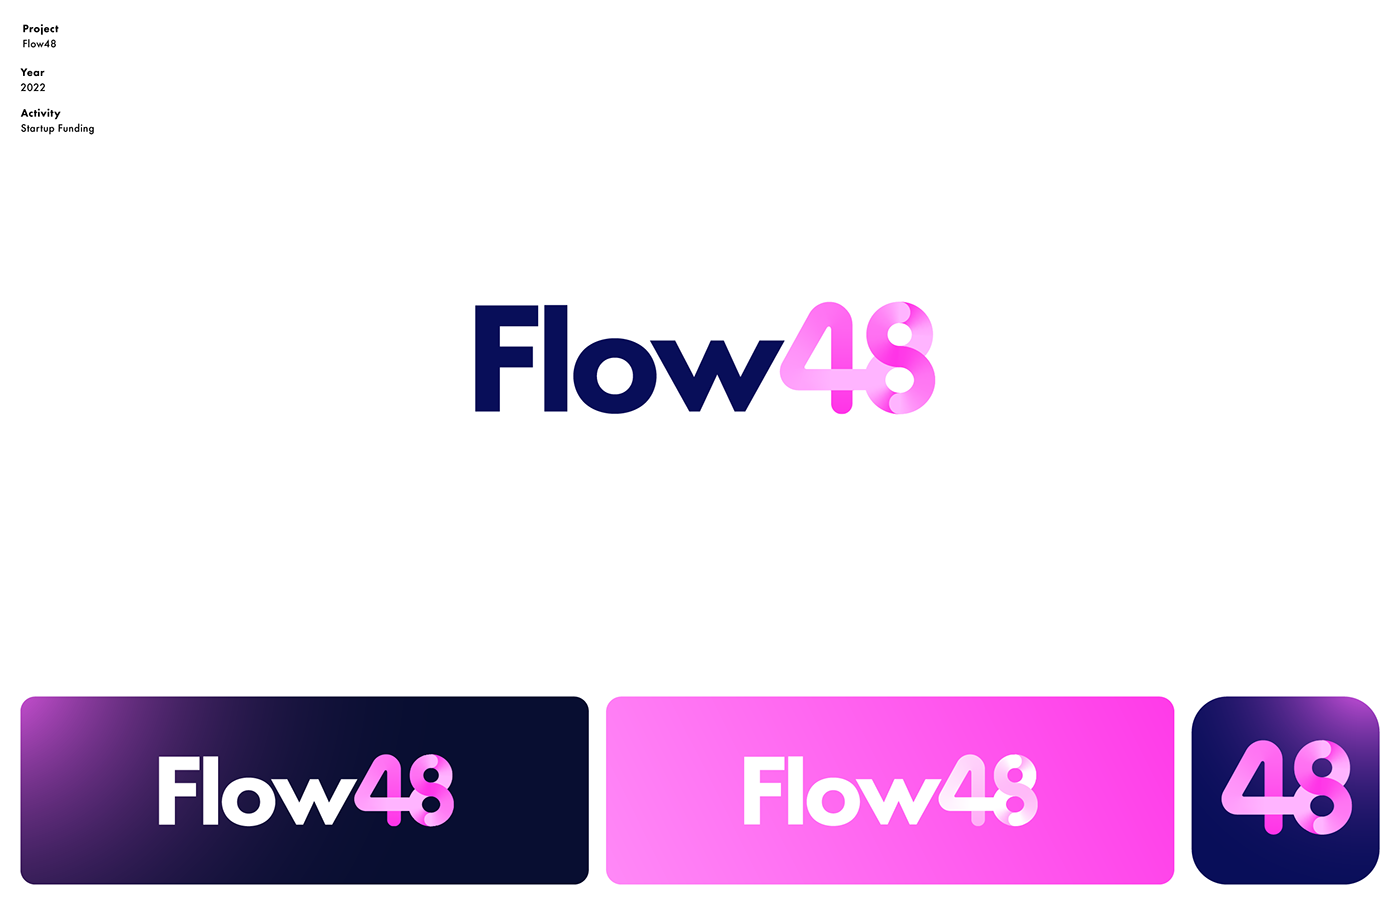 logotype wordmark for startup funding company flow 48 by mihai dolganiuc design